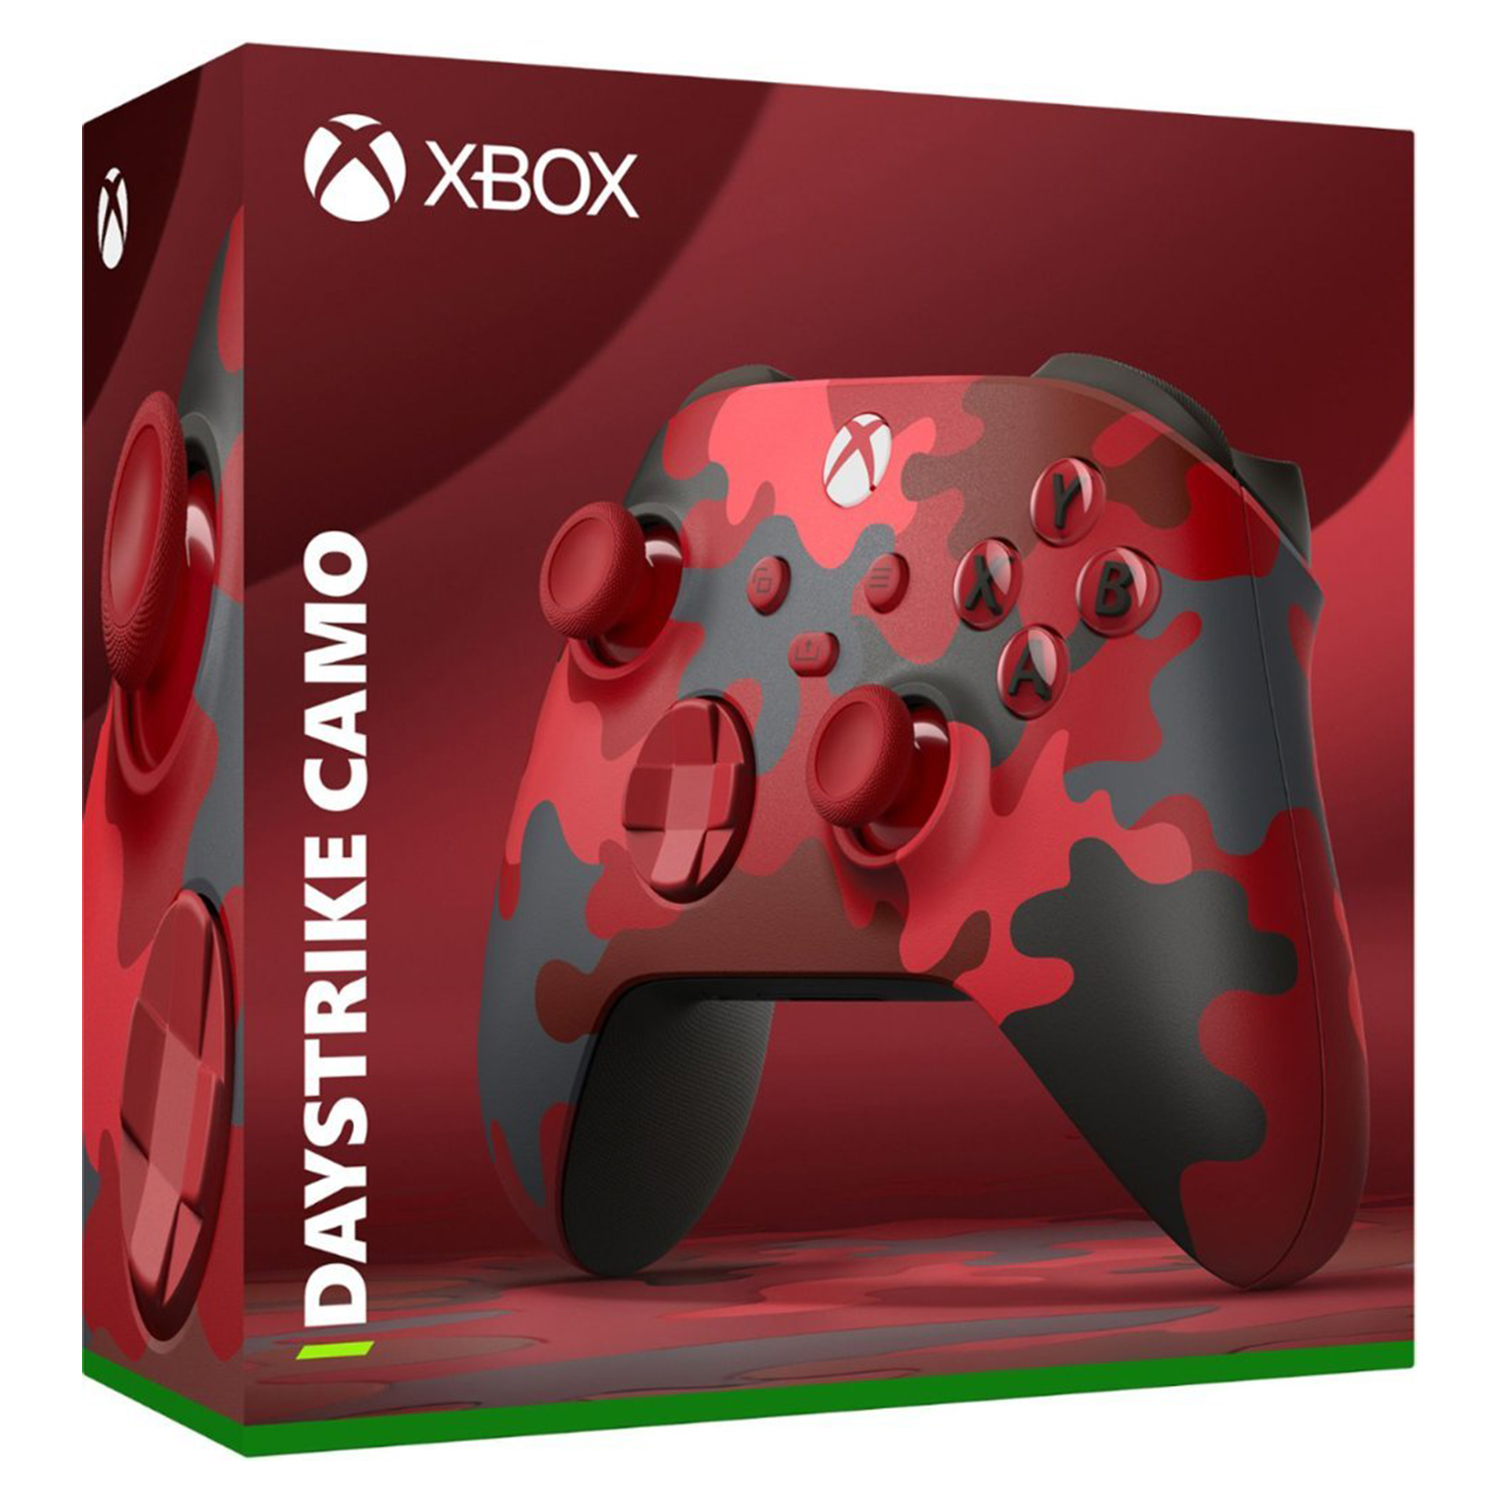 Controle Microsoft para Xbox Series X - Red Camo